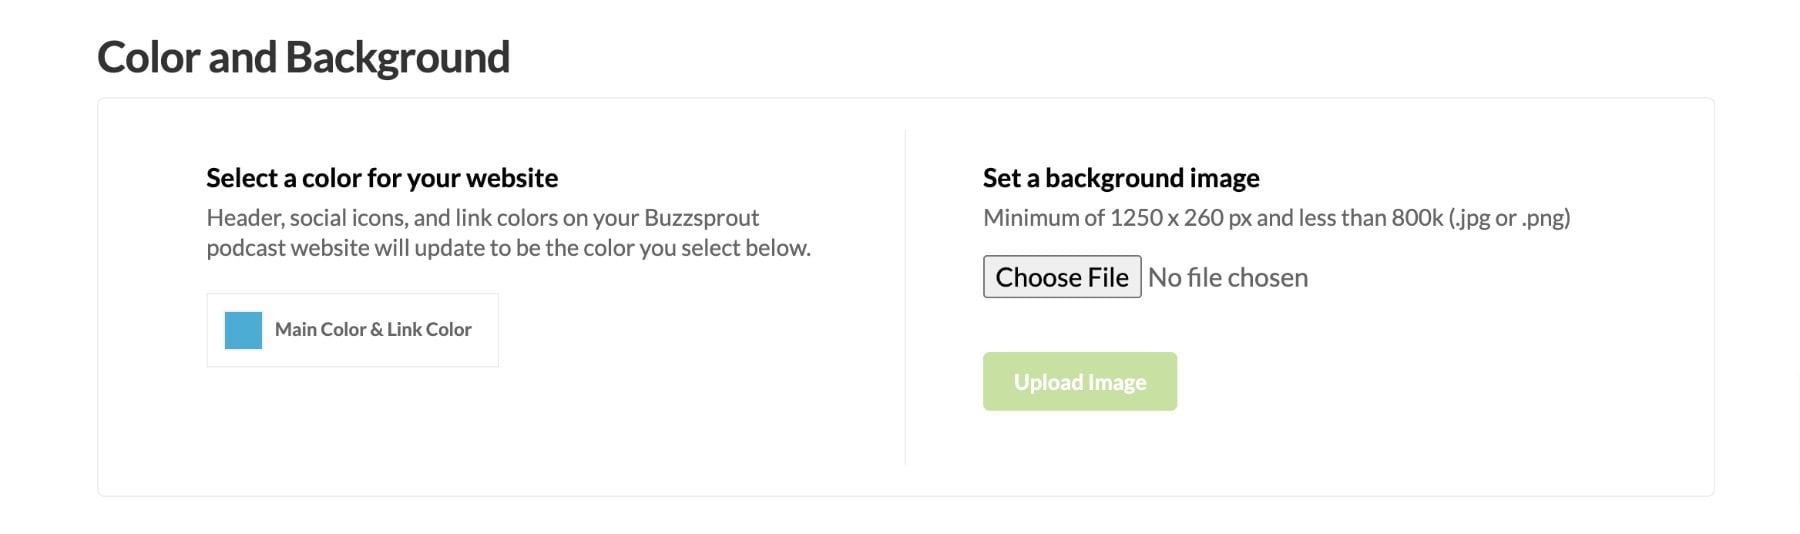 Buzzsprout design options